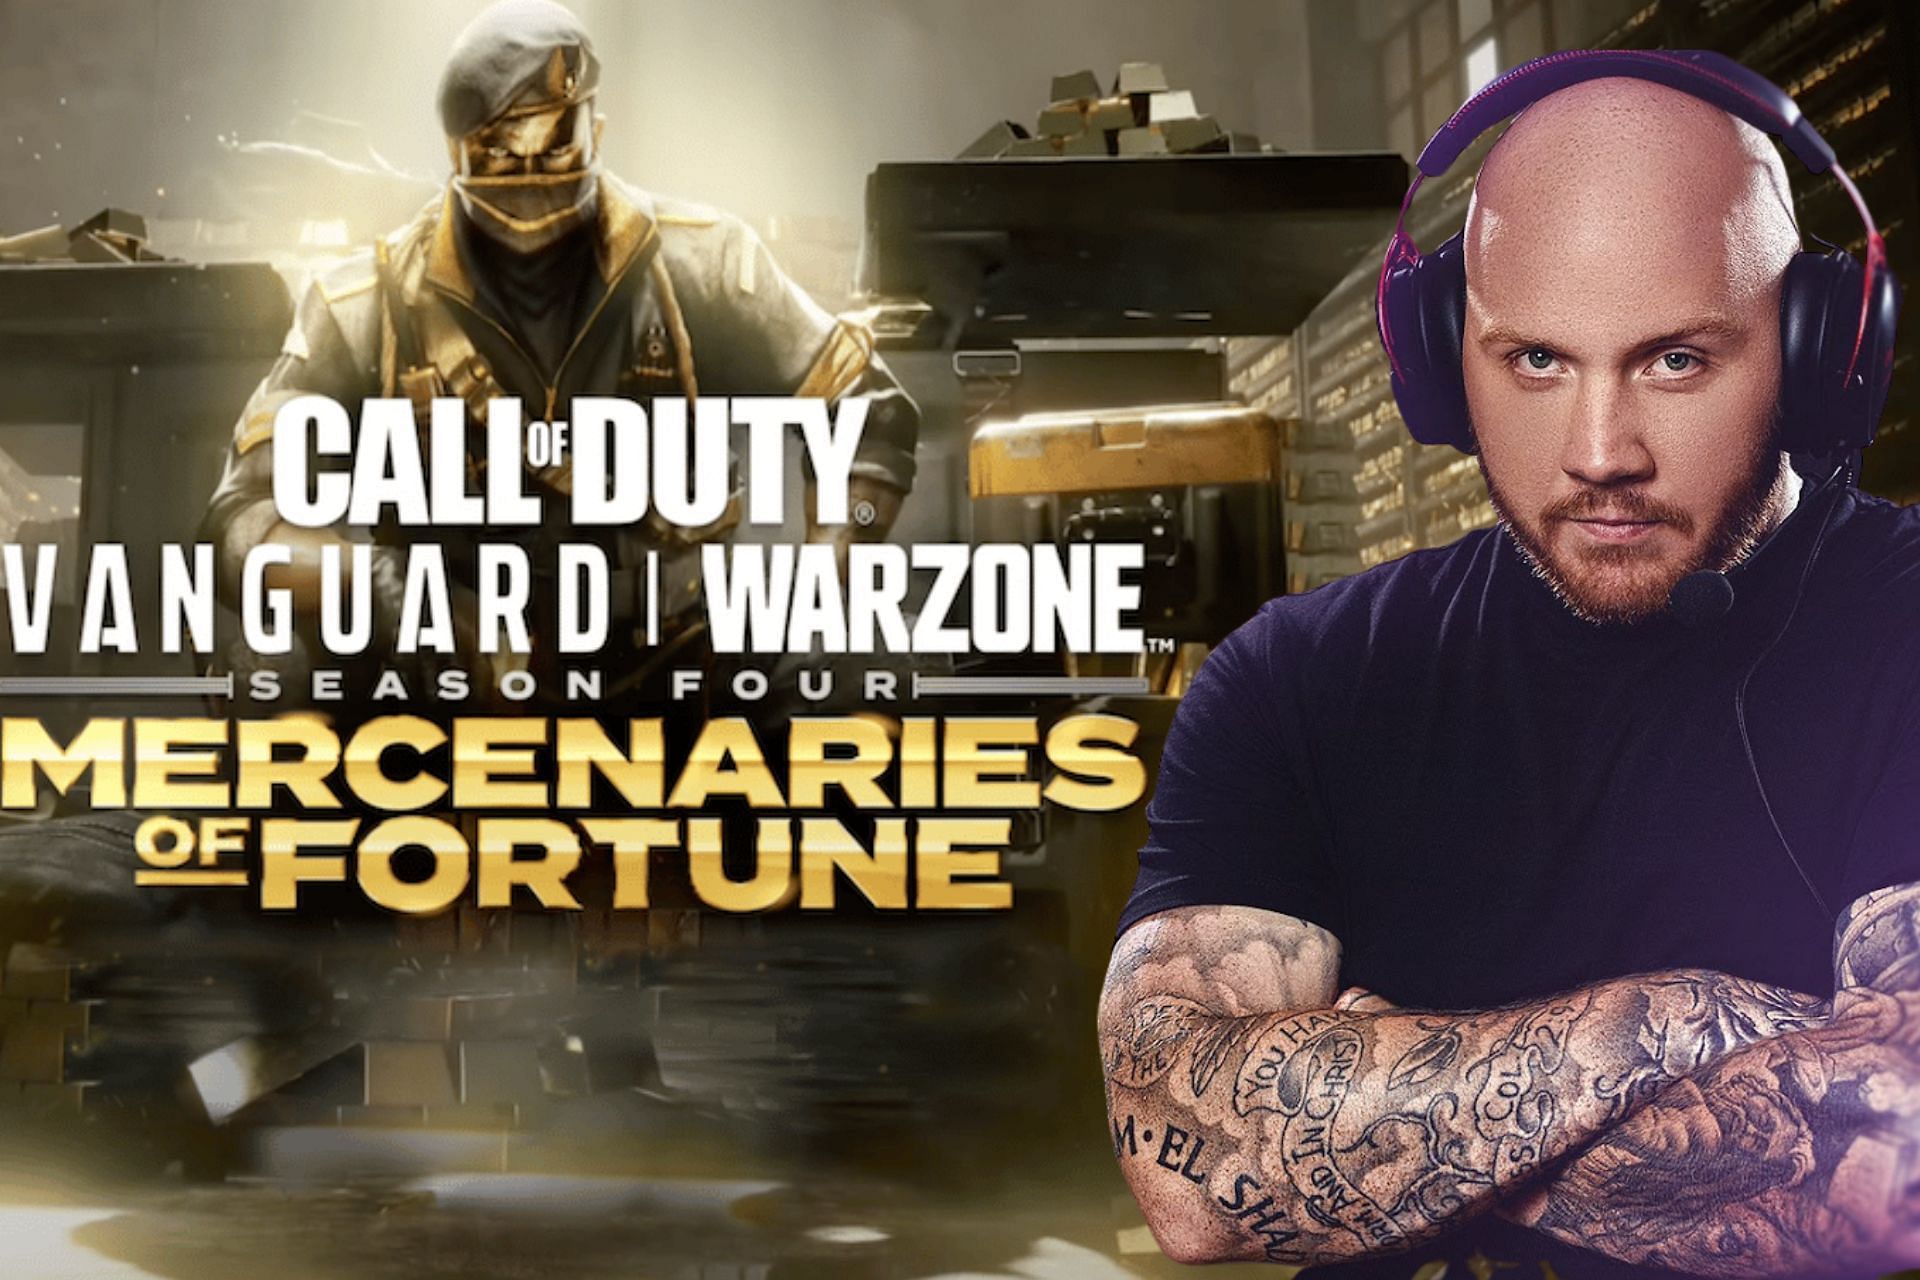 TimTheTatman reacts to the recent Call of Duty Warzone Season 4 update (Image via Sportskeeda)